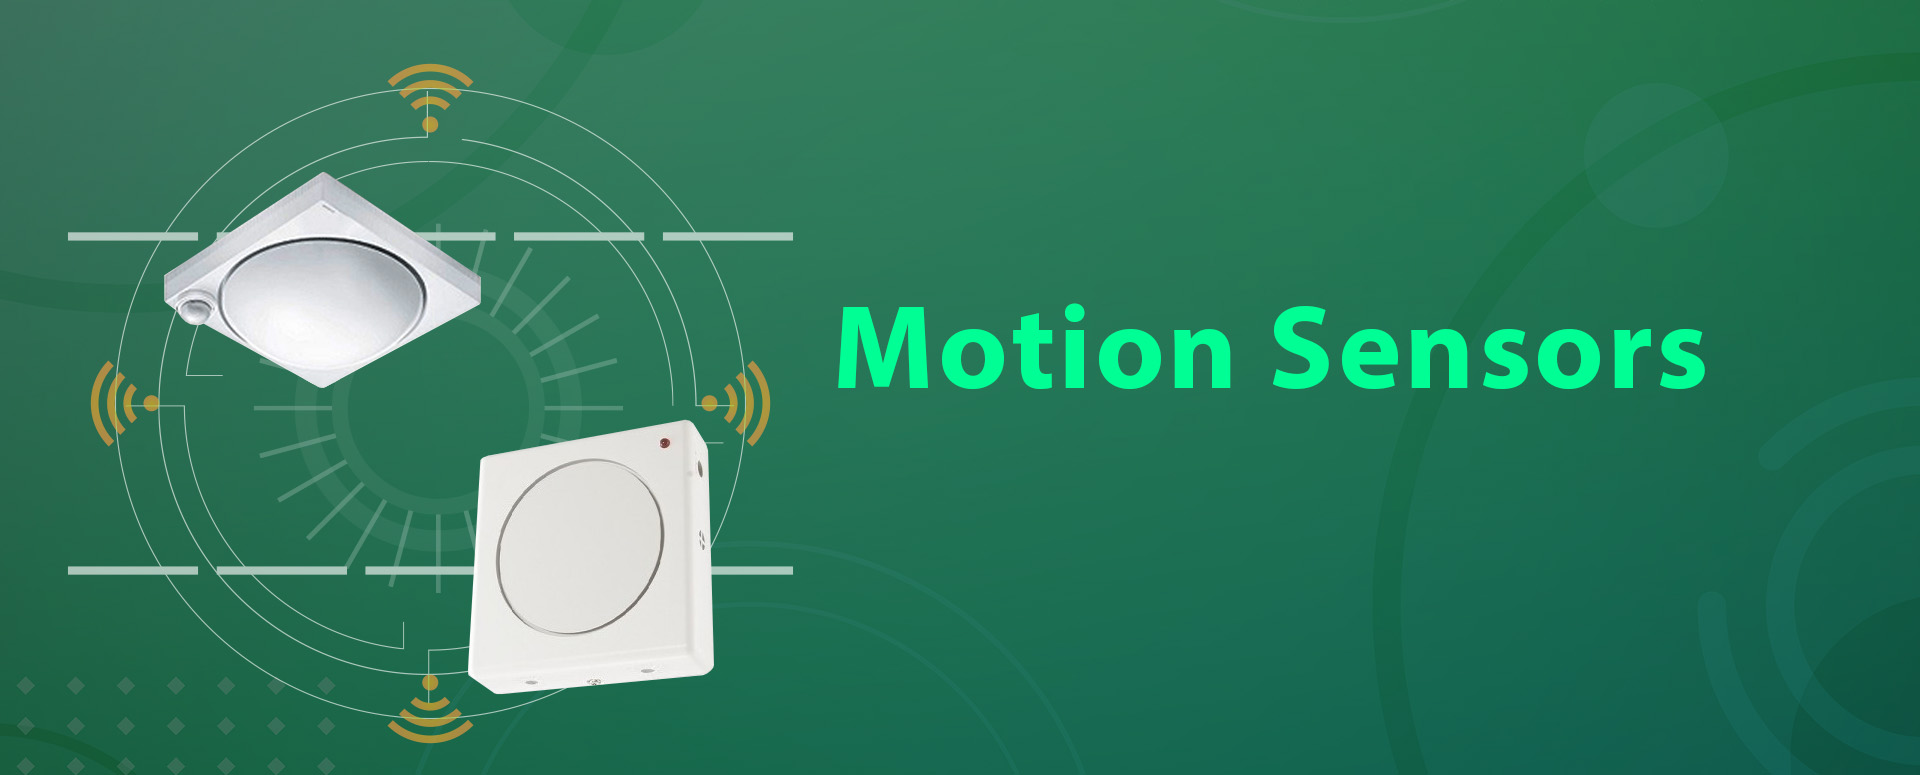 Motion sensors